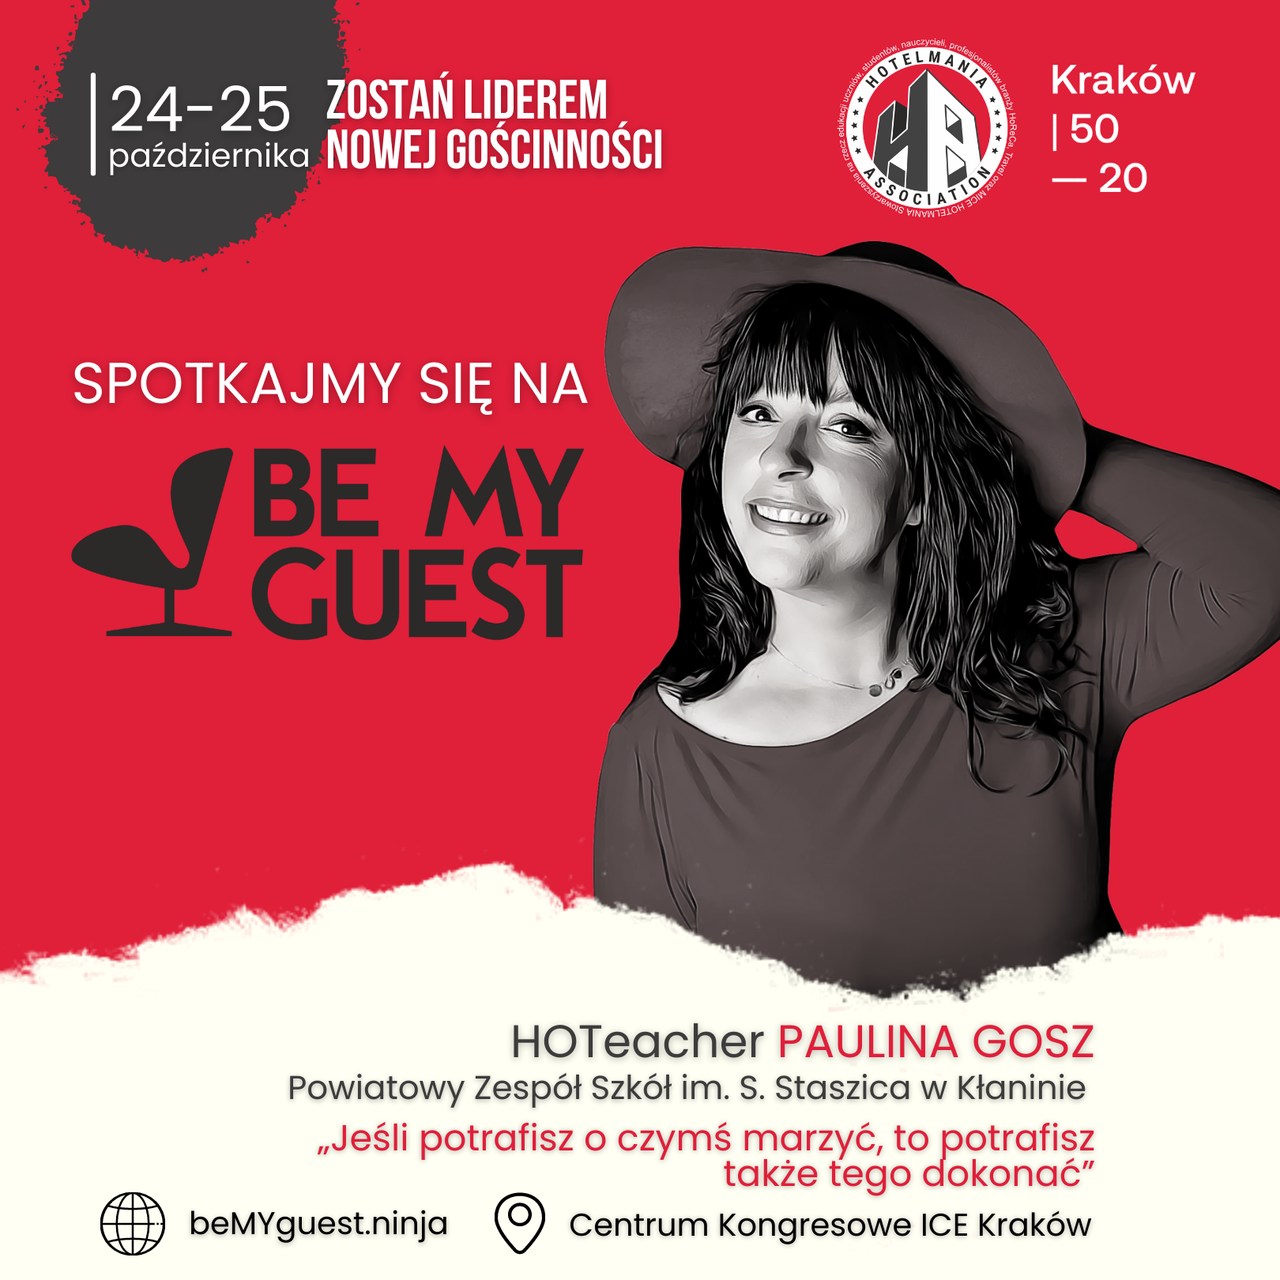 Be my Guest hoteacher Paulina Gosz